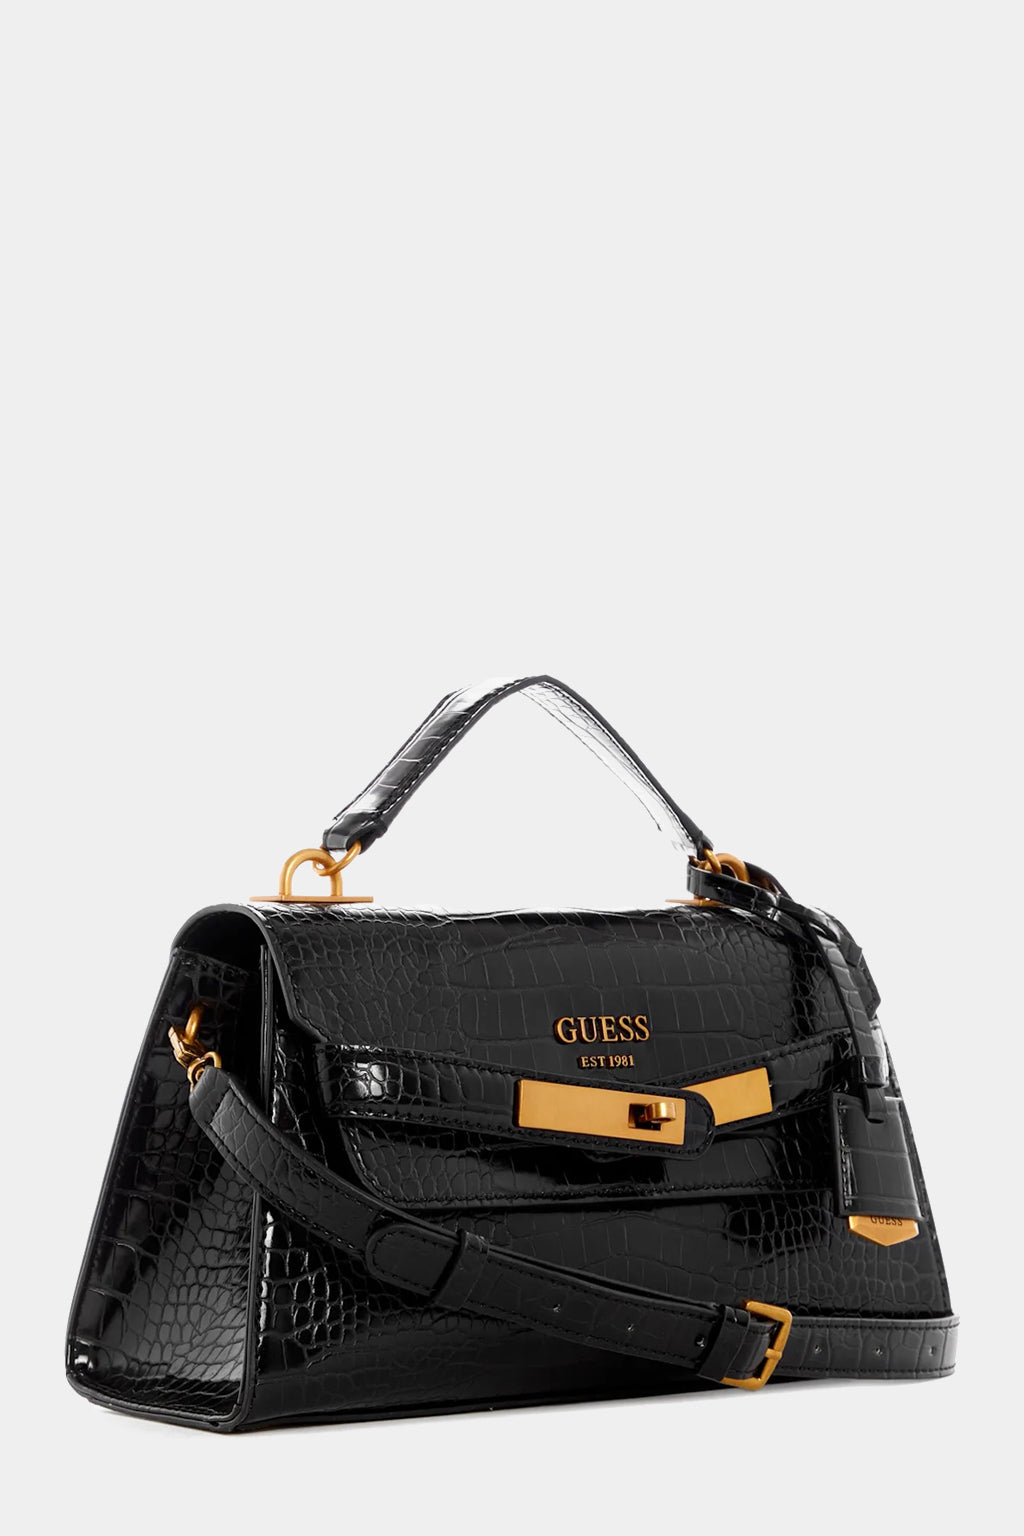 Guess Enisa Top-Handle Flap Bag